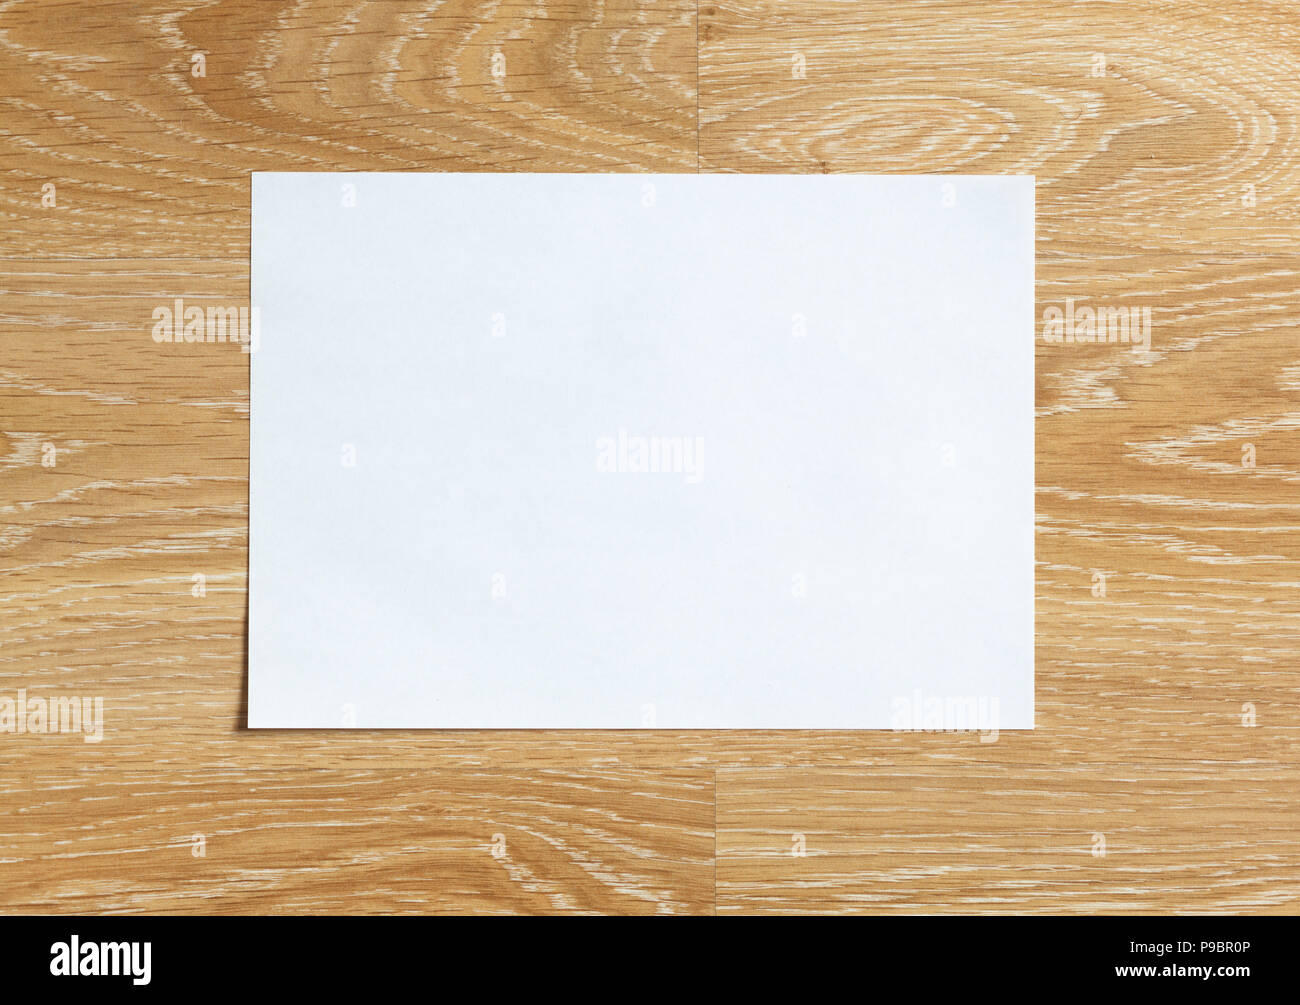 Blank sheet of paper landscape orientation on wooden background Stock Photo